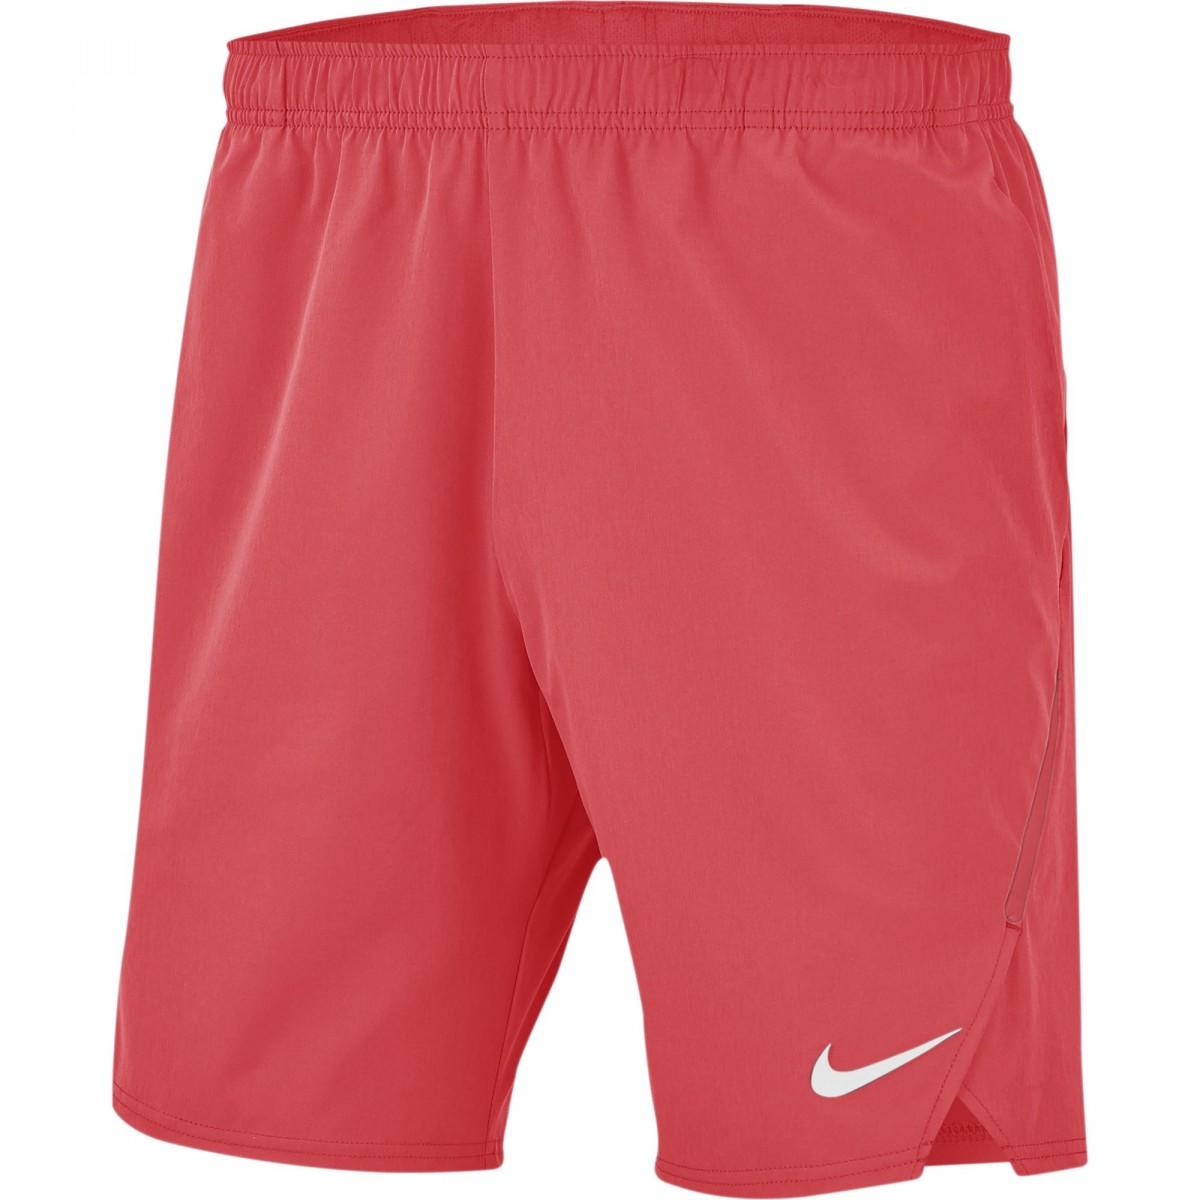 Теннисные шорты мужские Nike Flex Ace 9IN Short ember glow/ember glow/white